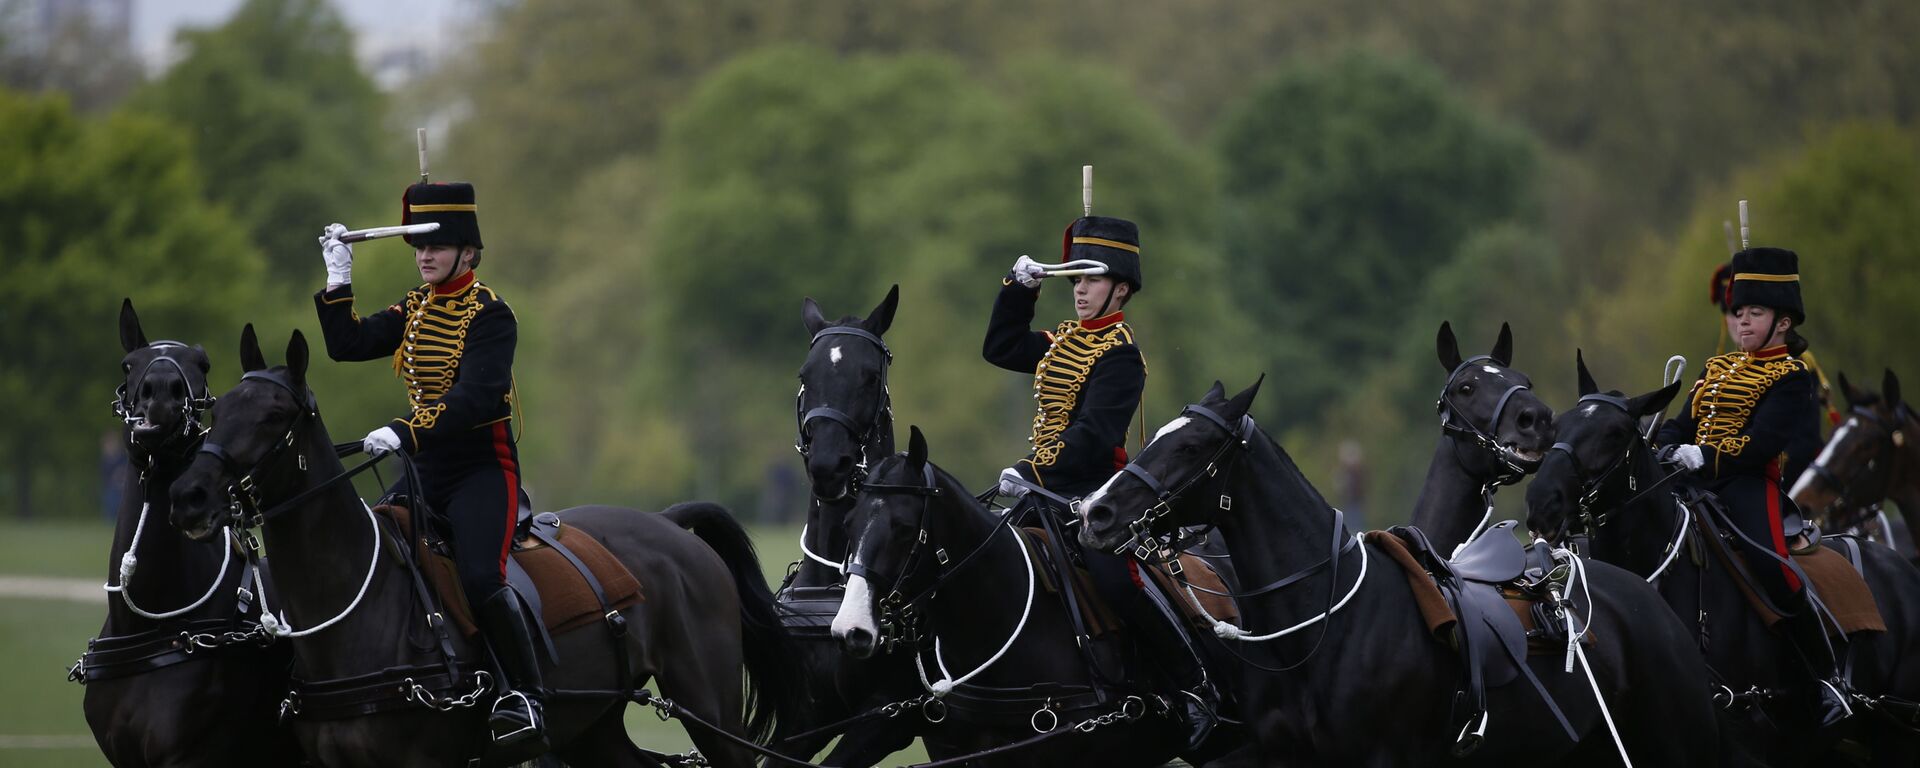 Members of the King's Troop Royal Horse Artillery take part in a ceremonial 41 gun salute in Hyde Park to mark Britain's Queen Elizabeth II 's 91st birthday, in London, Friday, April 21, 2017.  - Sputnik International, 1920, 10.04.2021